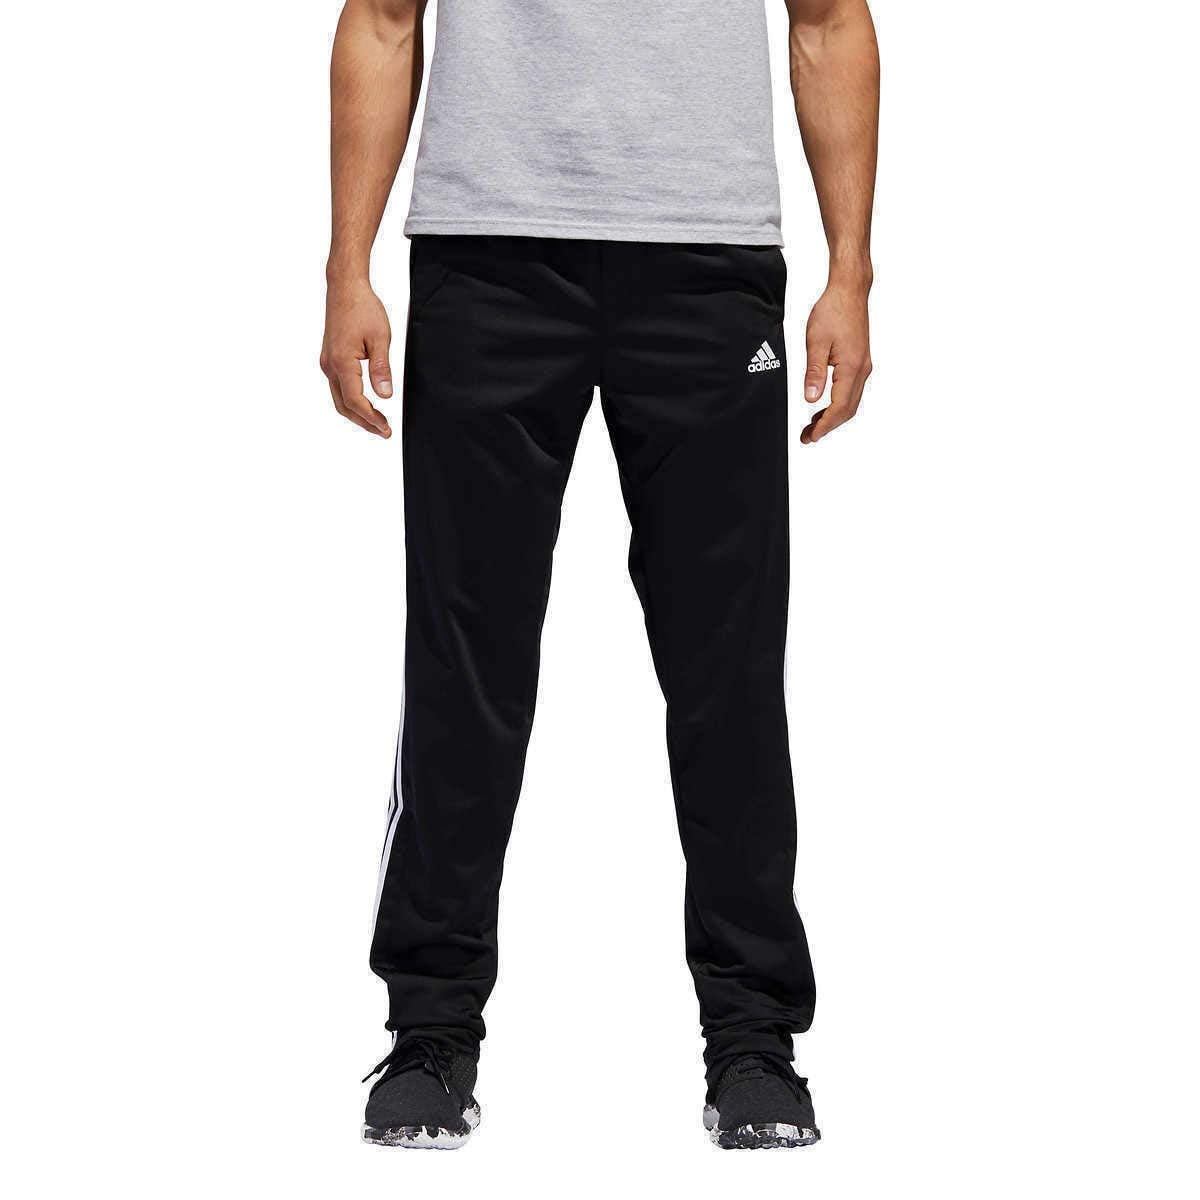 Adidas Mens Pants White Stripe Game Day Athletic Large) - NEW - Walmart.com